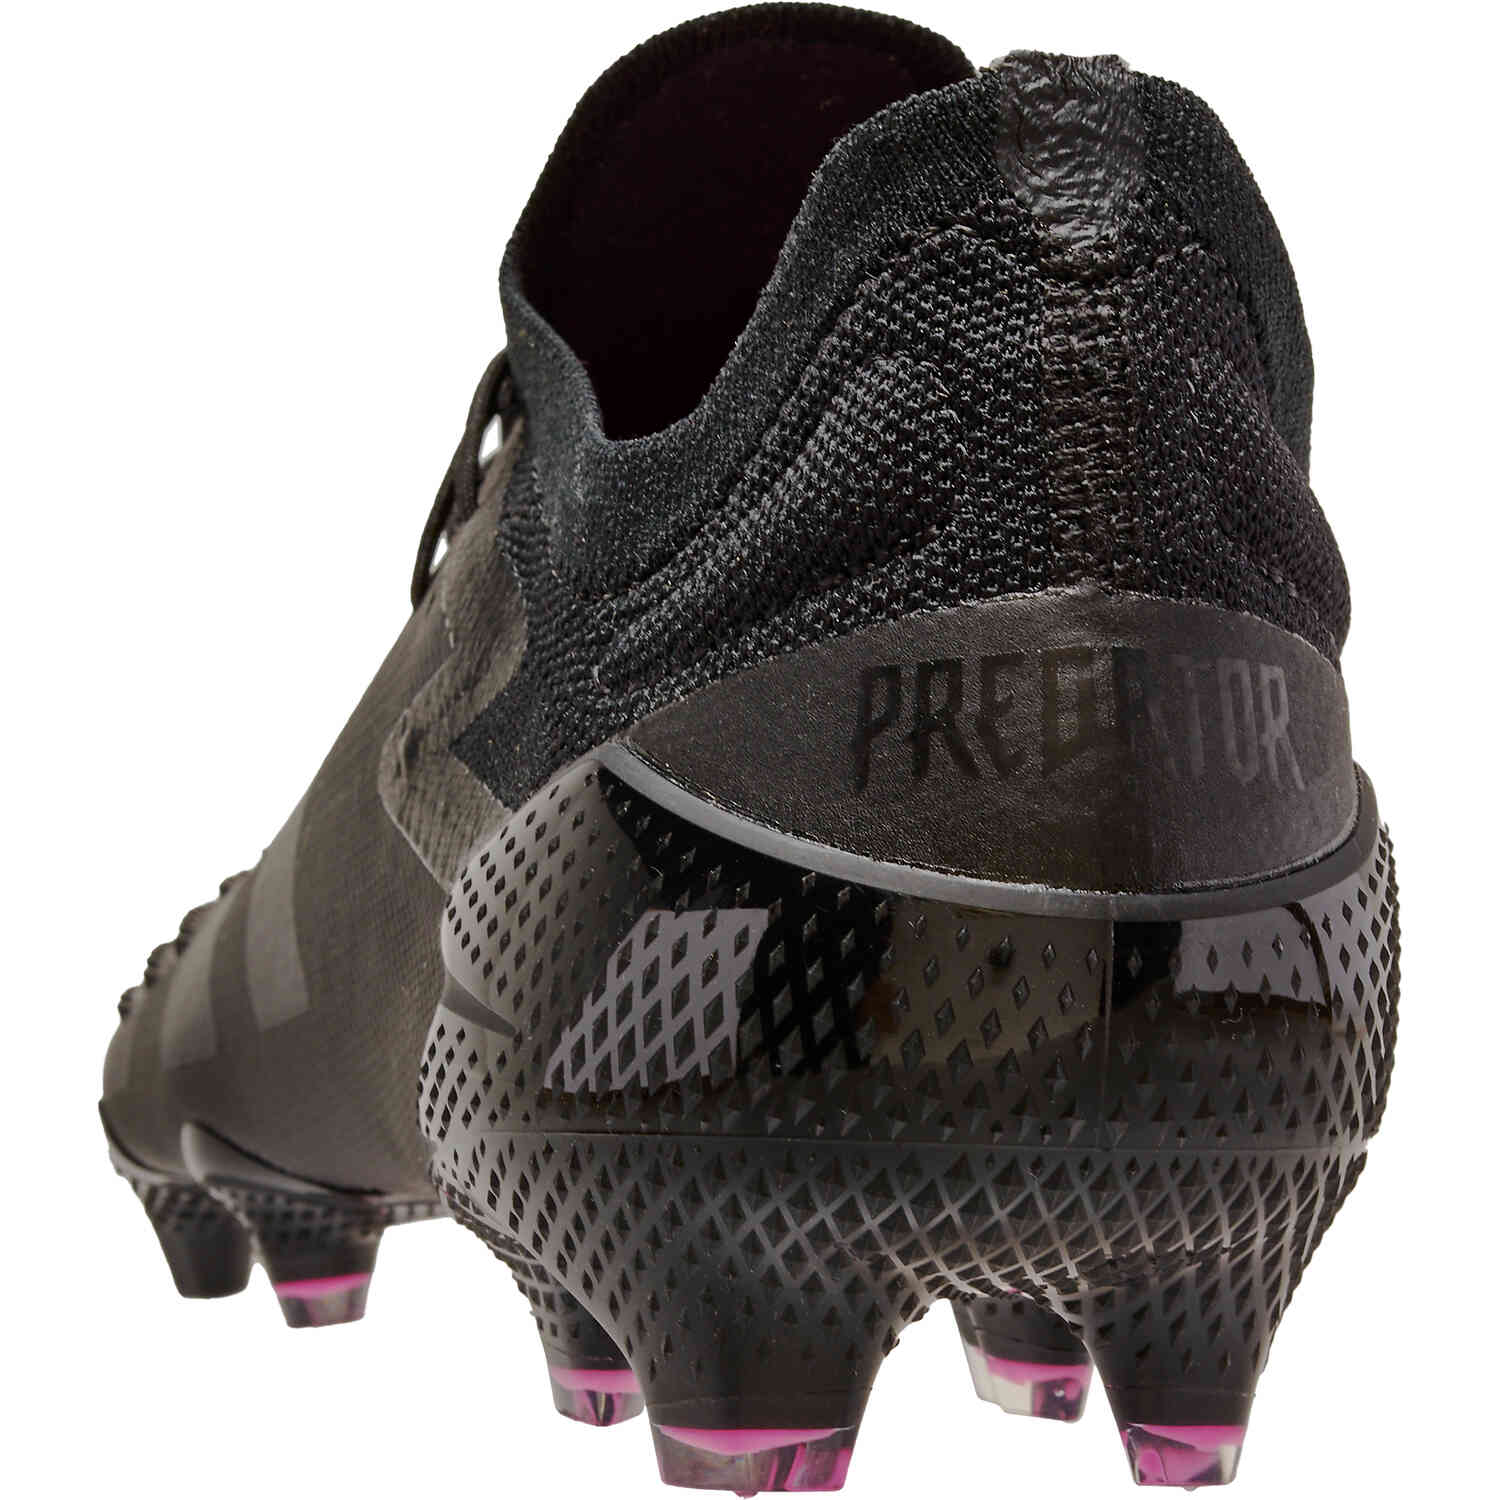 Adidas Predator 20 MTC Fingersave Gloves Black adidas.